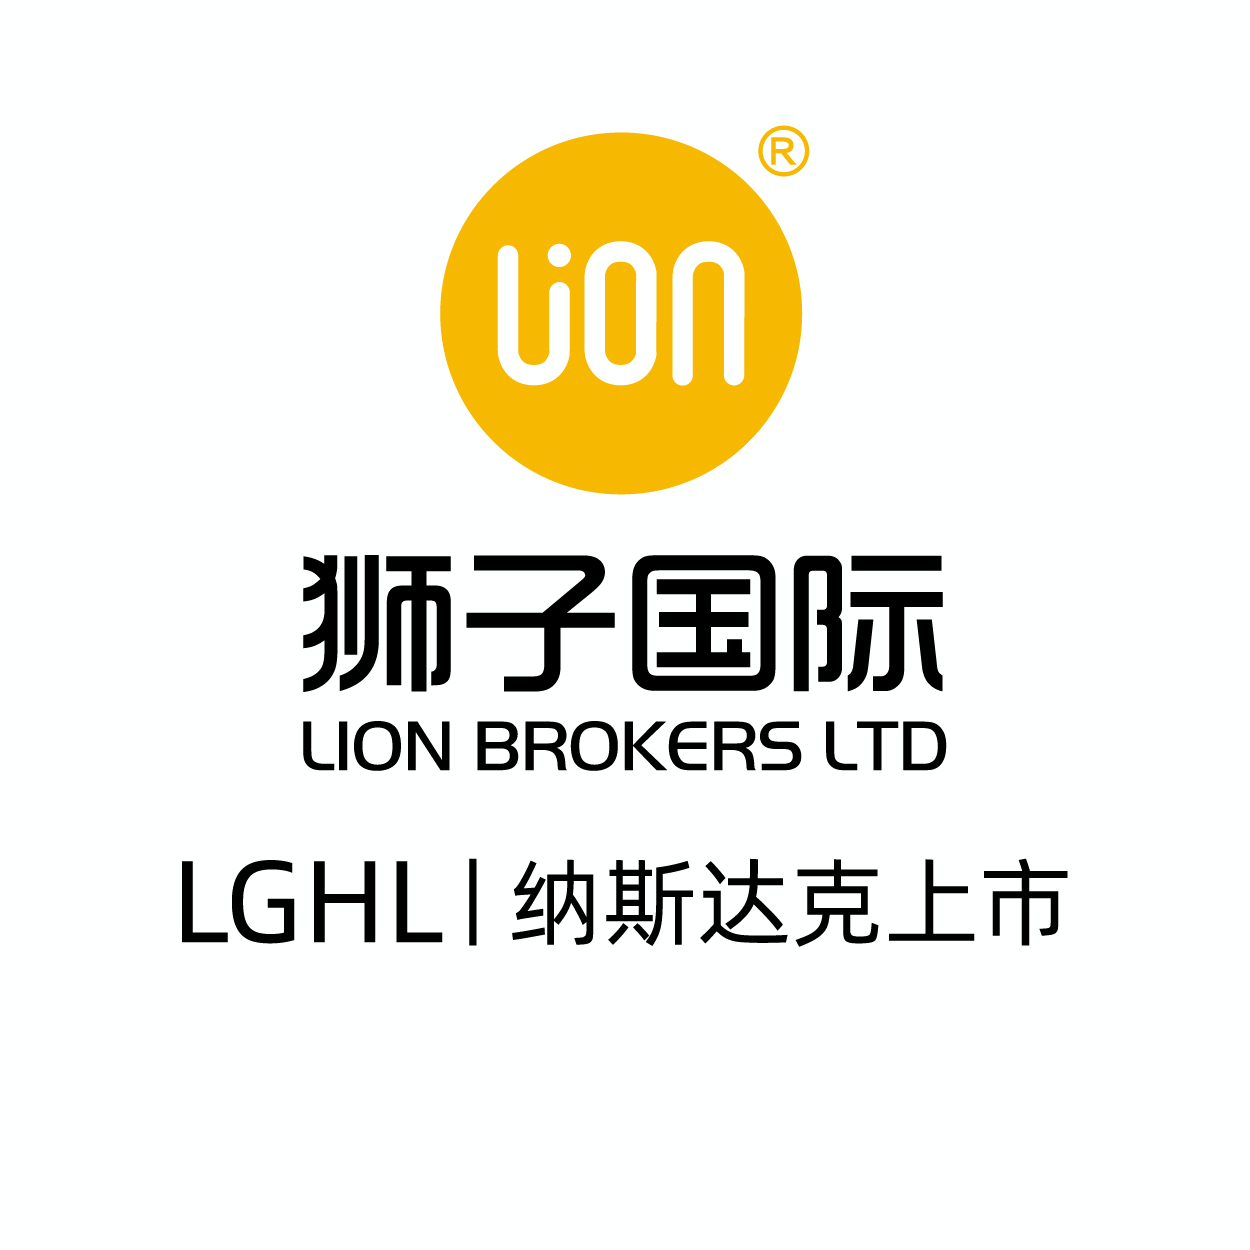 狮子国际 Lion Brokers